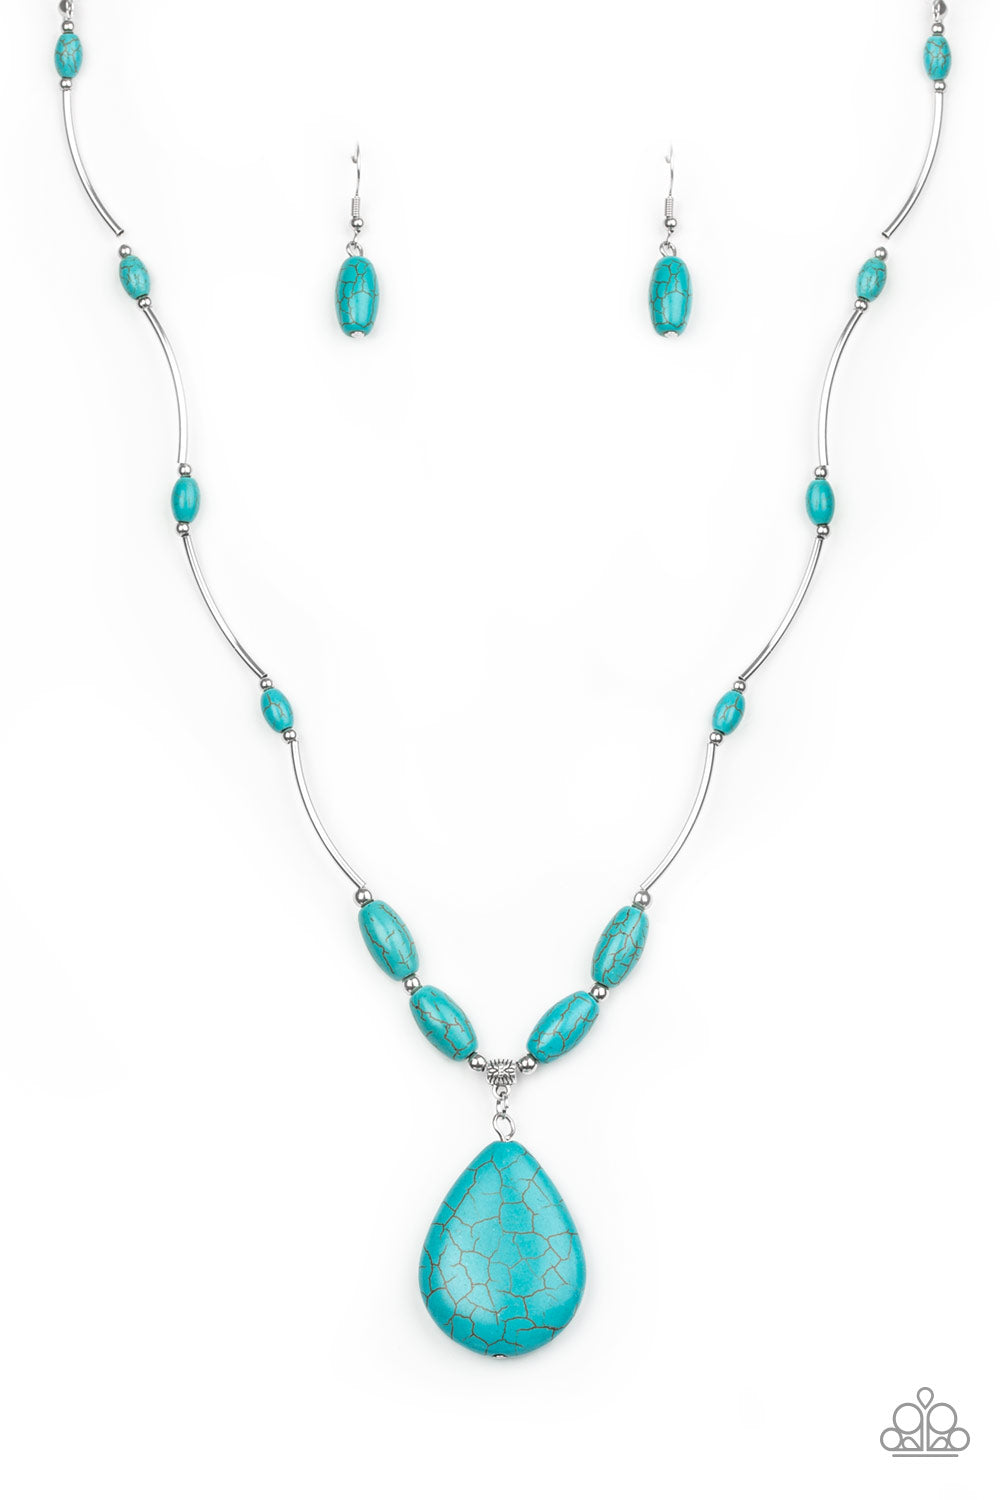 Explore the Elements - Turquoise Blue - Paparazzi Necklace